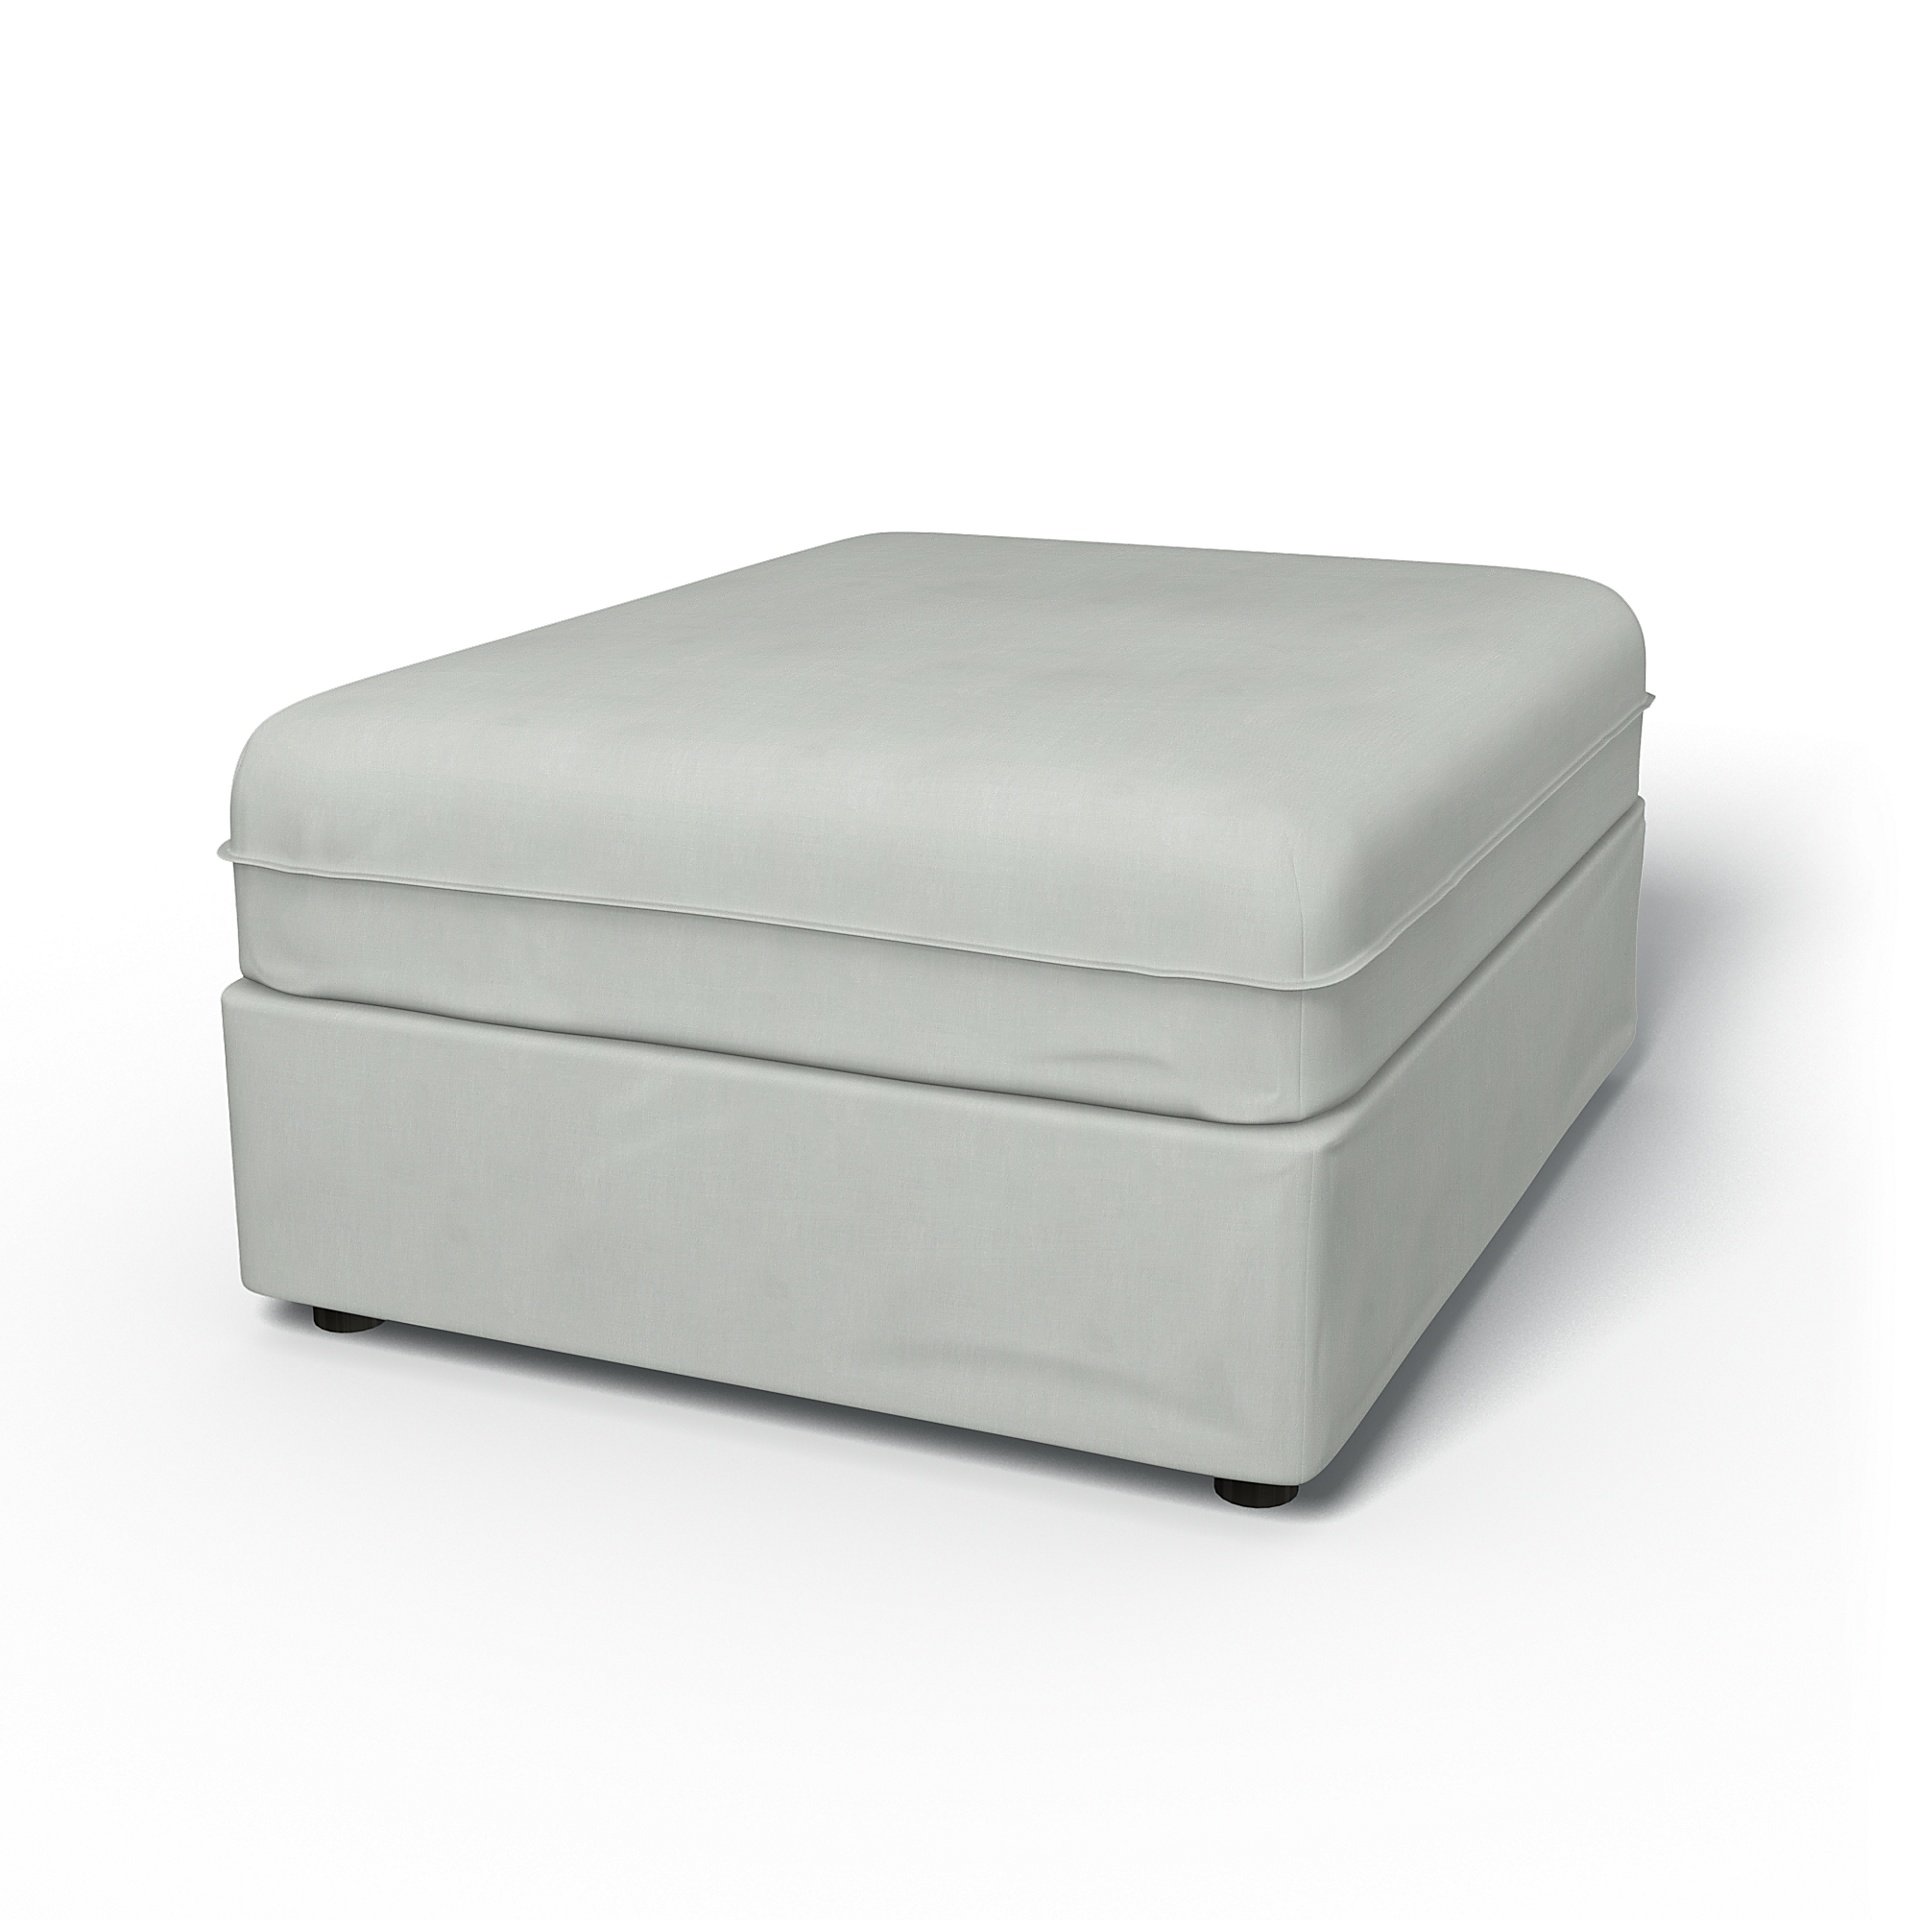 IKEA - Vallentuna Seat Module Cover 80x100cm 32x39in, Silver Grey, Linen - Bemz